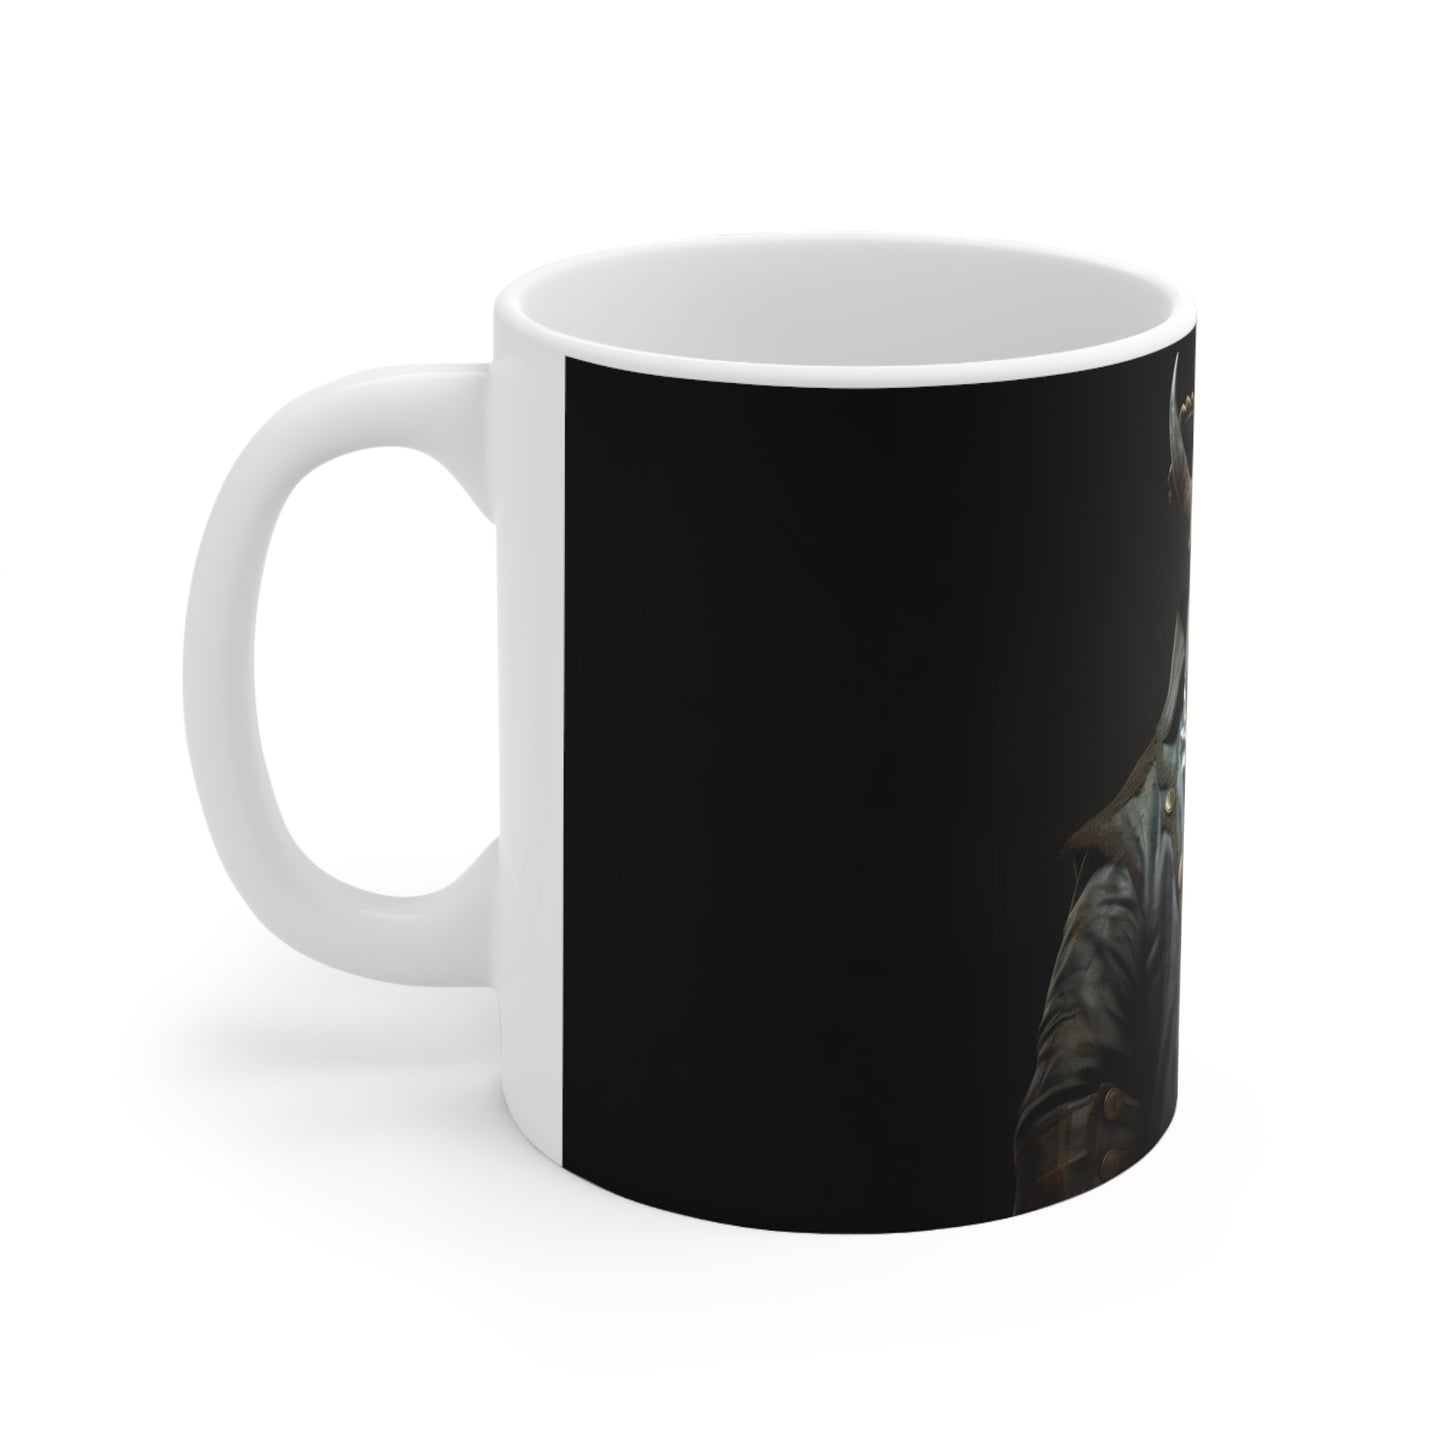 Rhino Pirate | Ceramic Mug 11oz